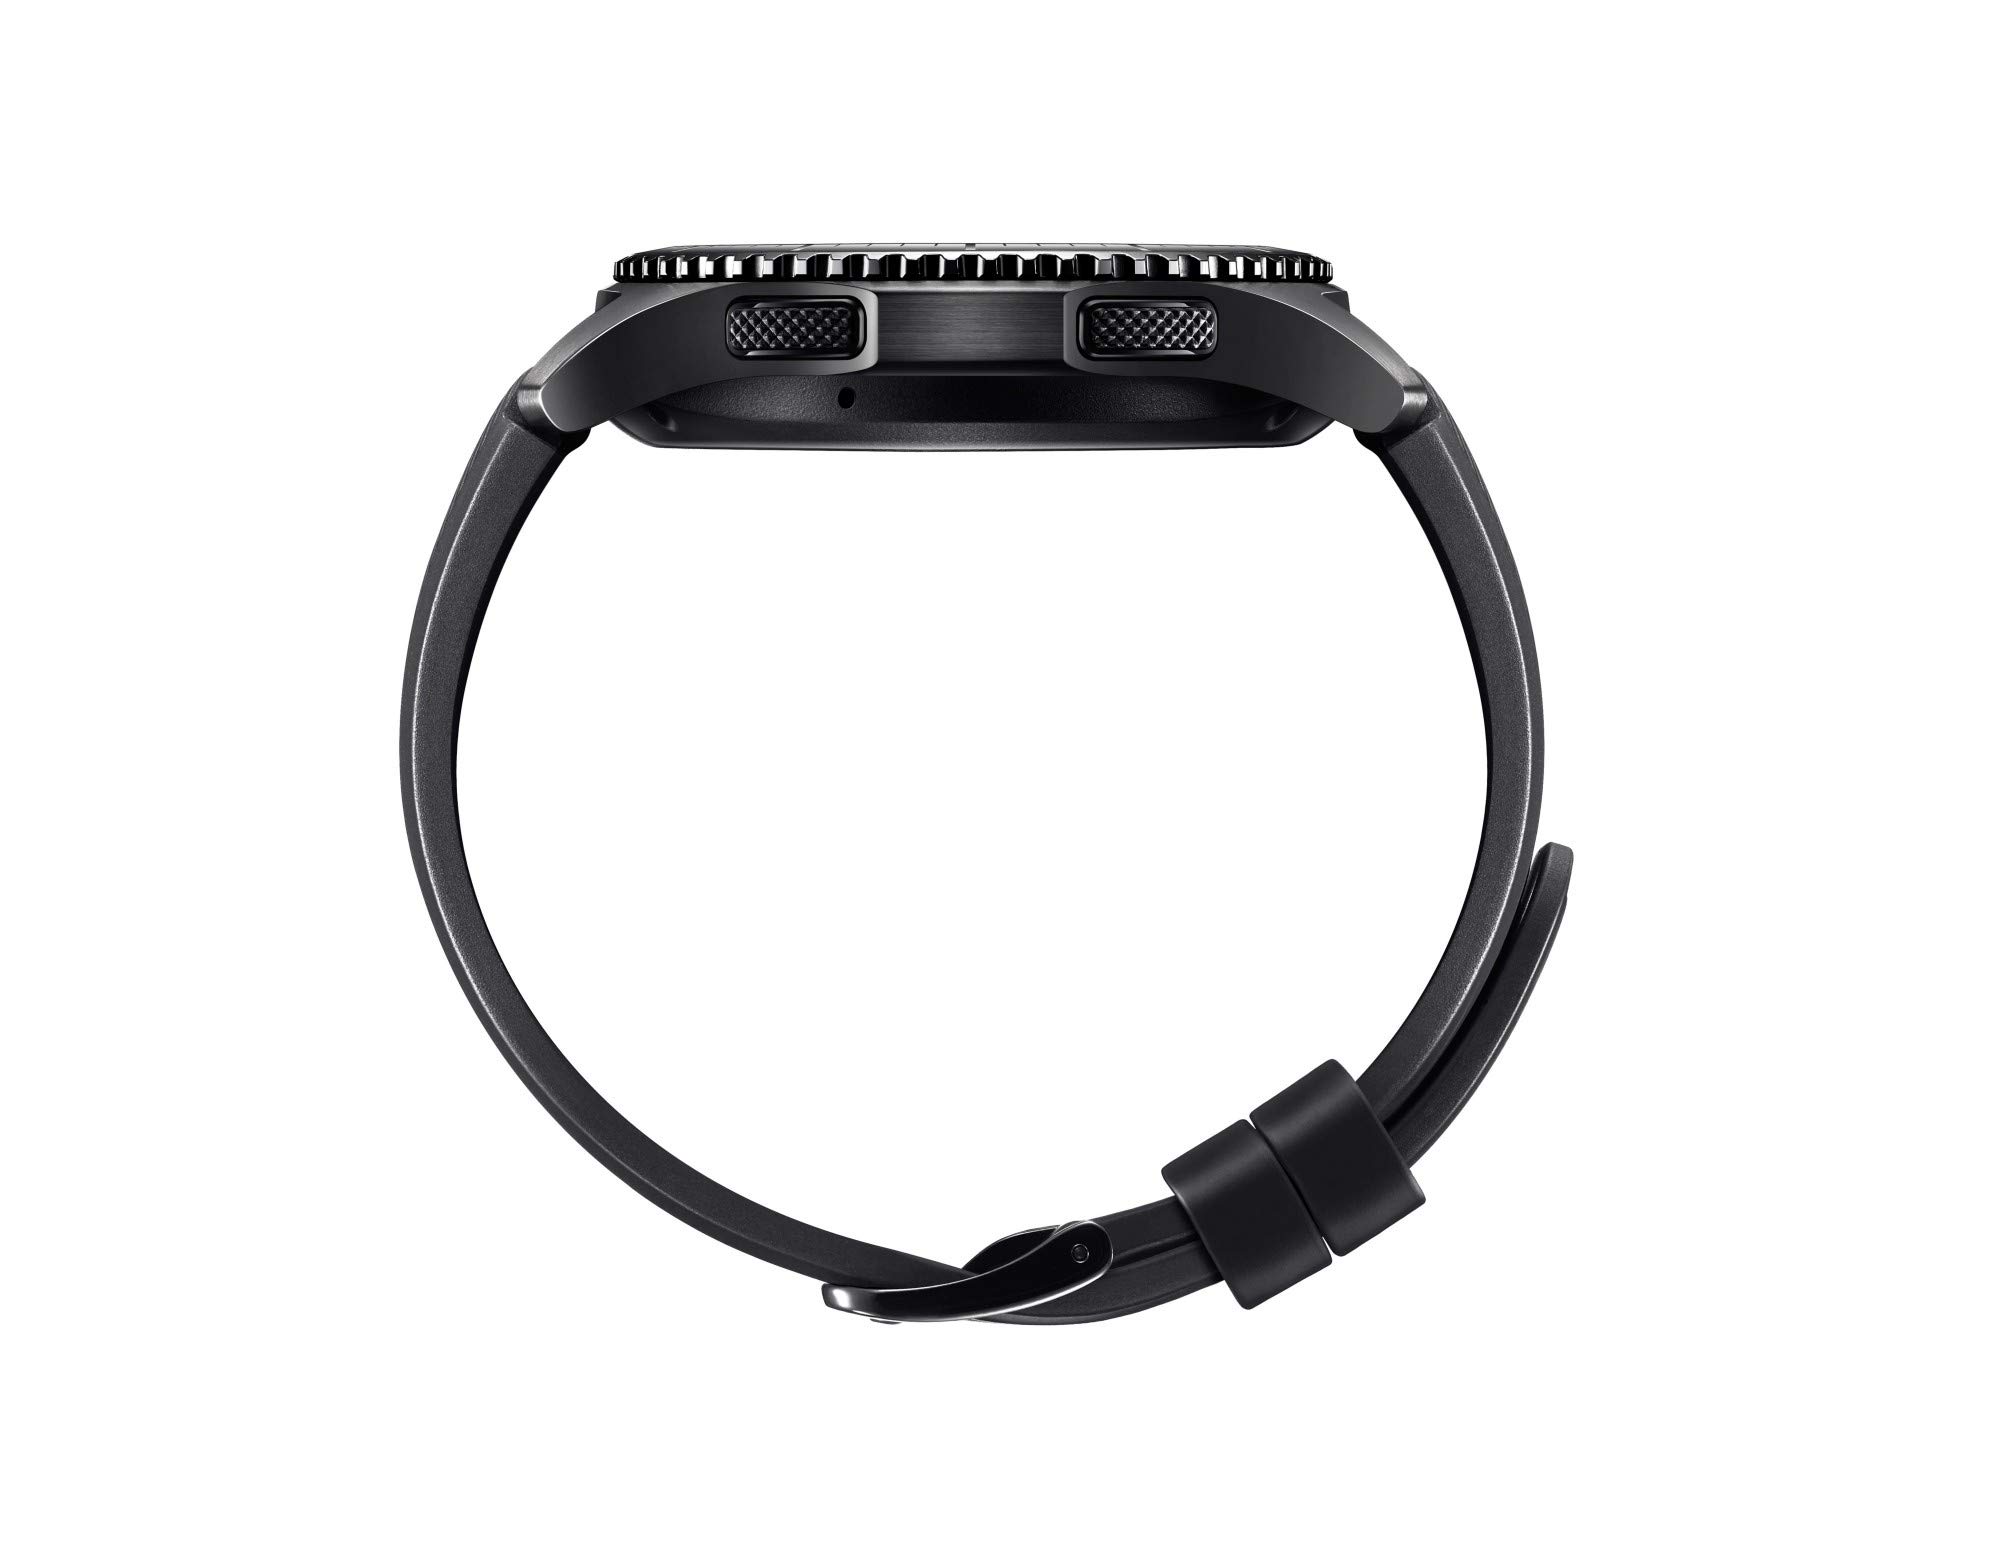 Samsung Gear S3 Frontier SM-R760 Smartwatch, International Version, No Warranty